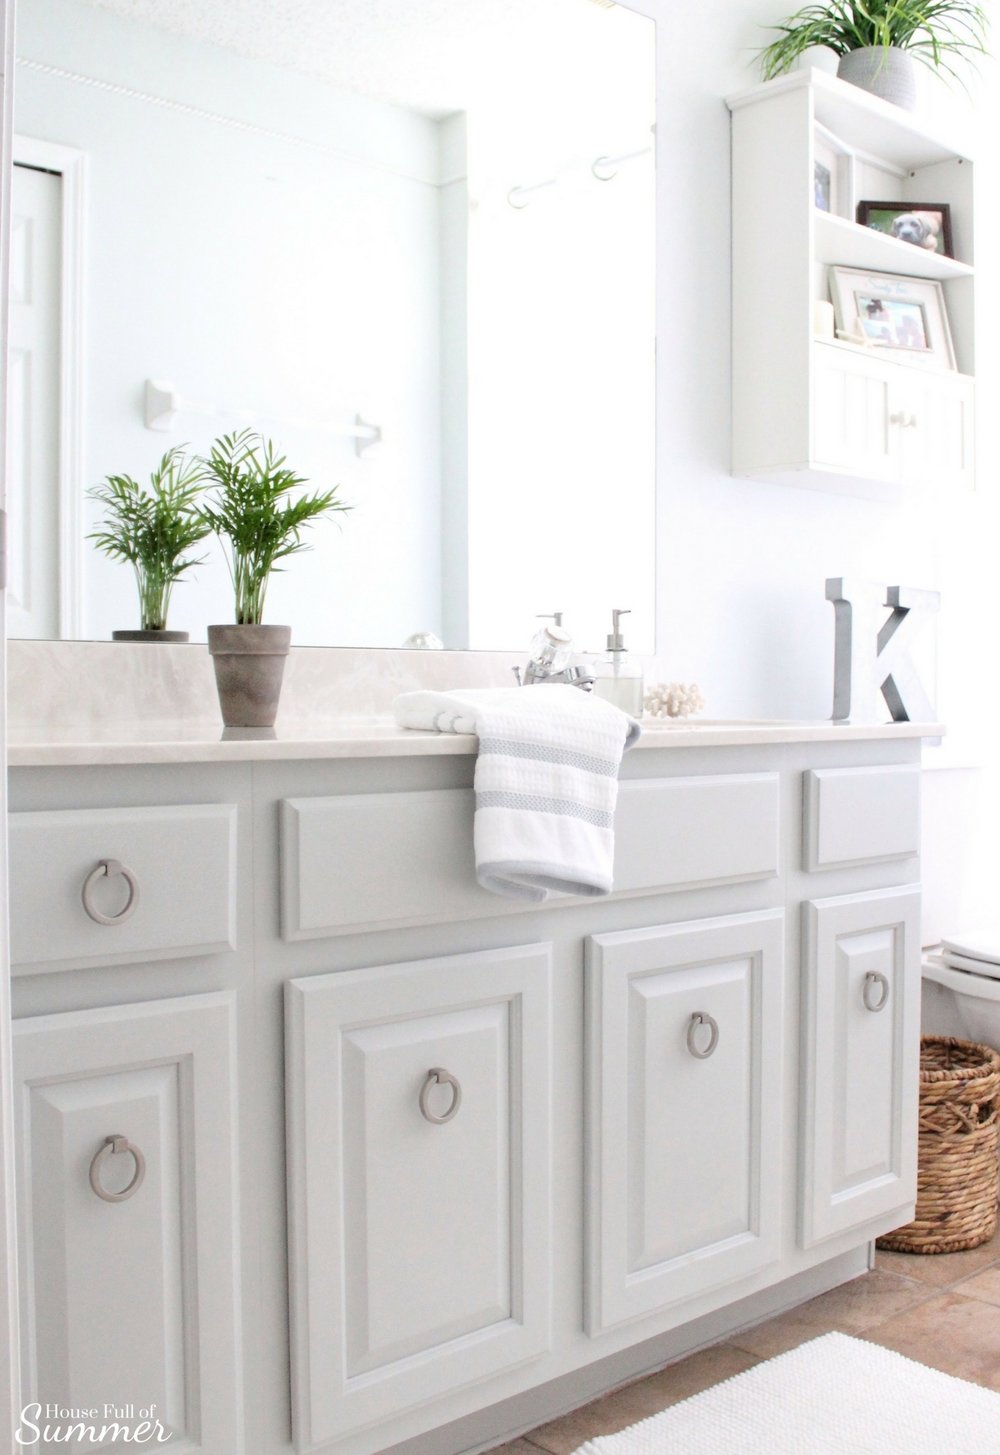 easy bathroom cabinet transformation — house full of summer